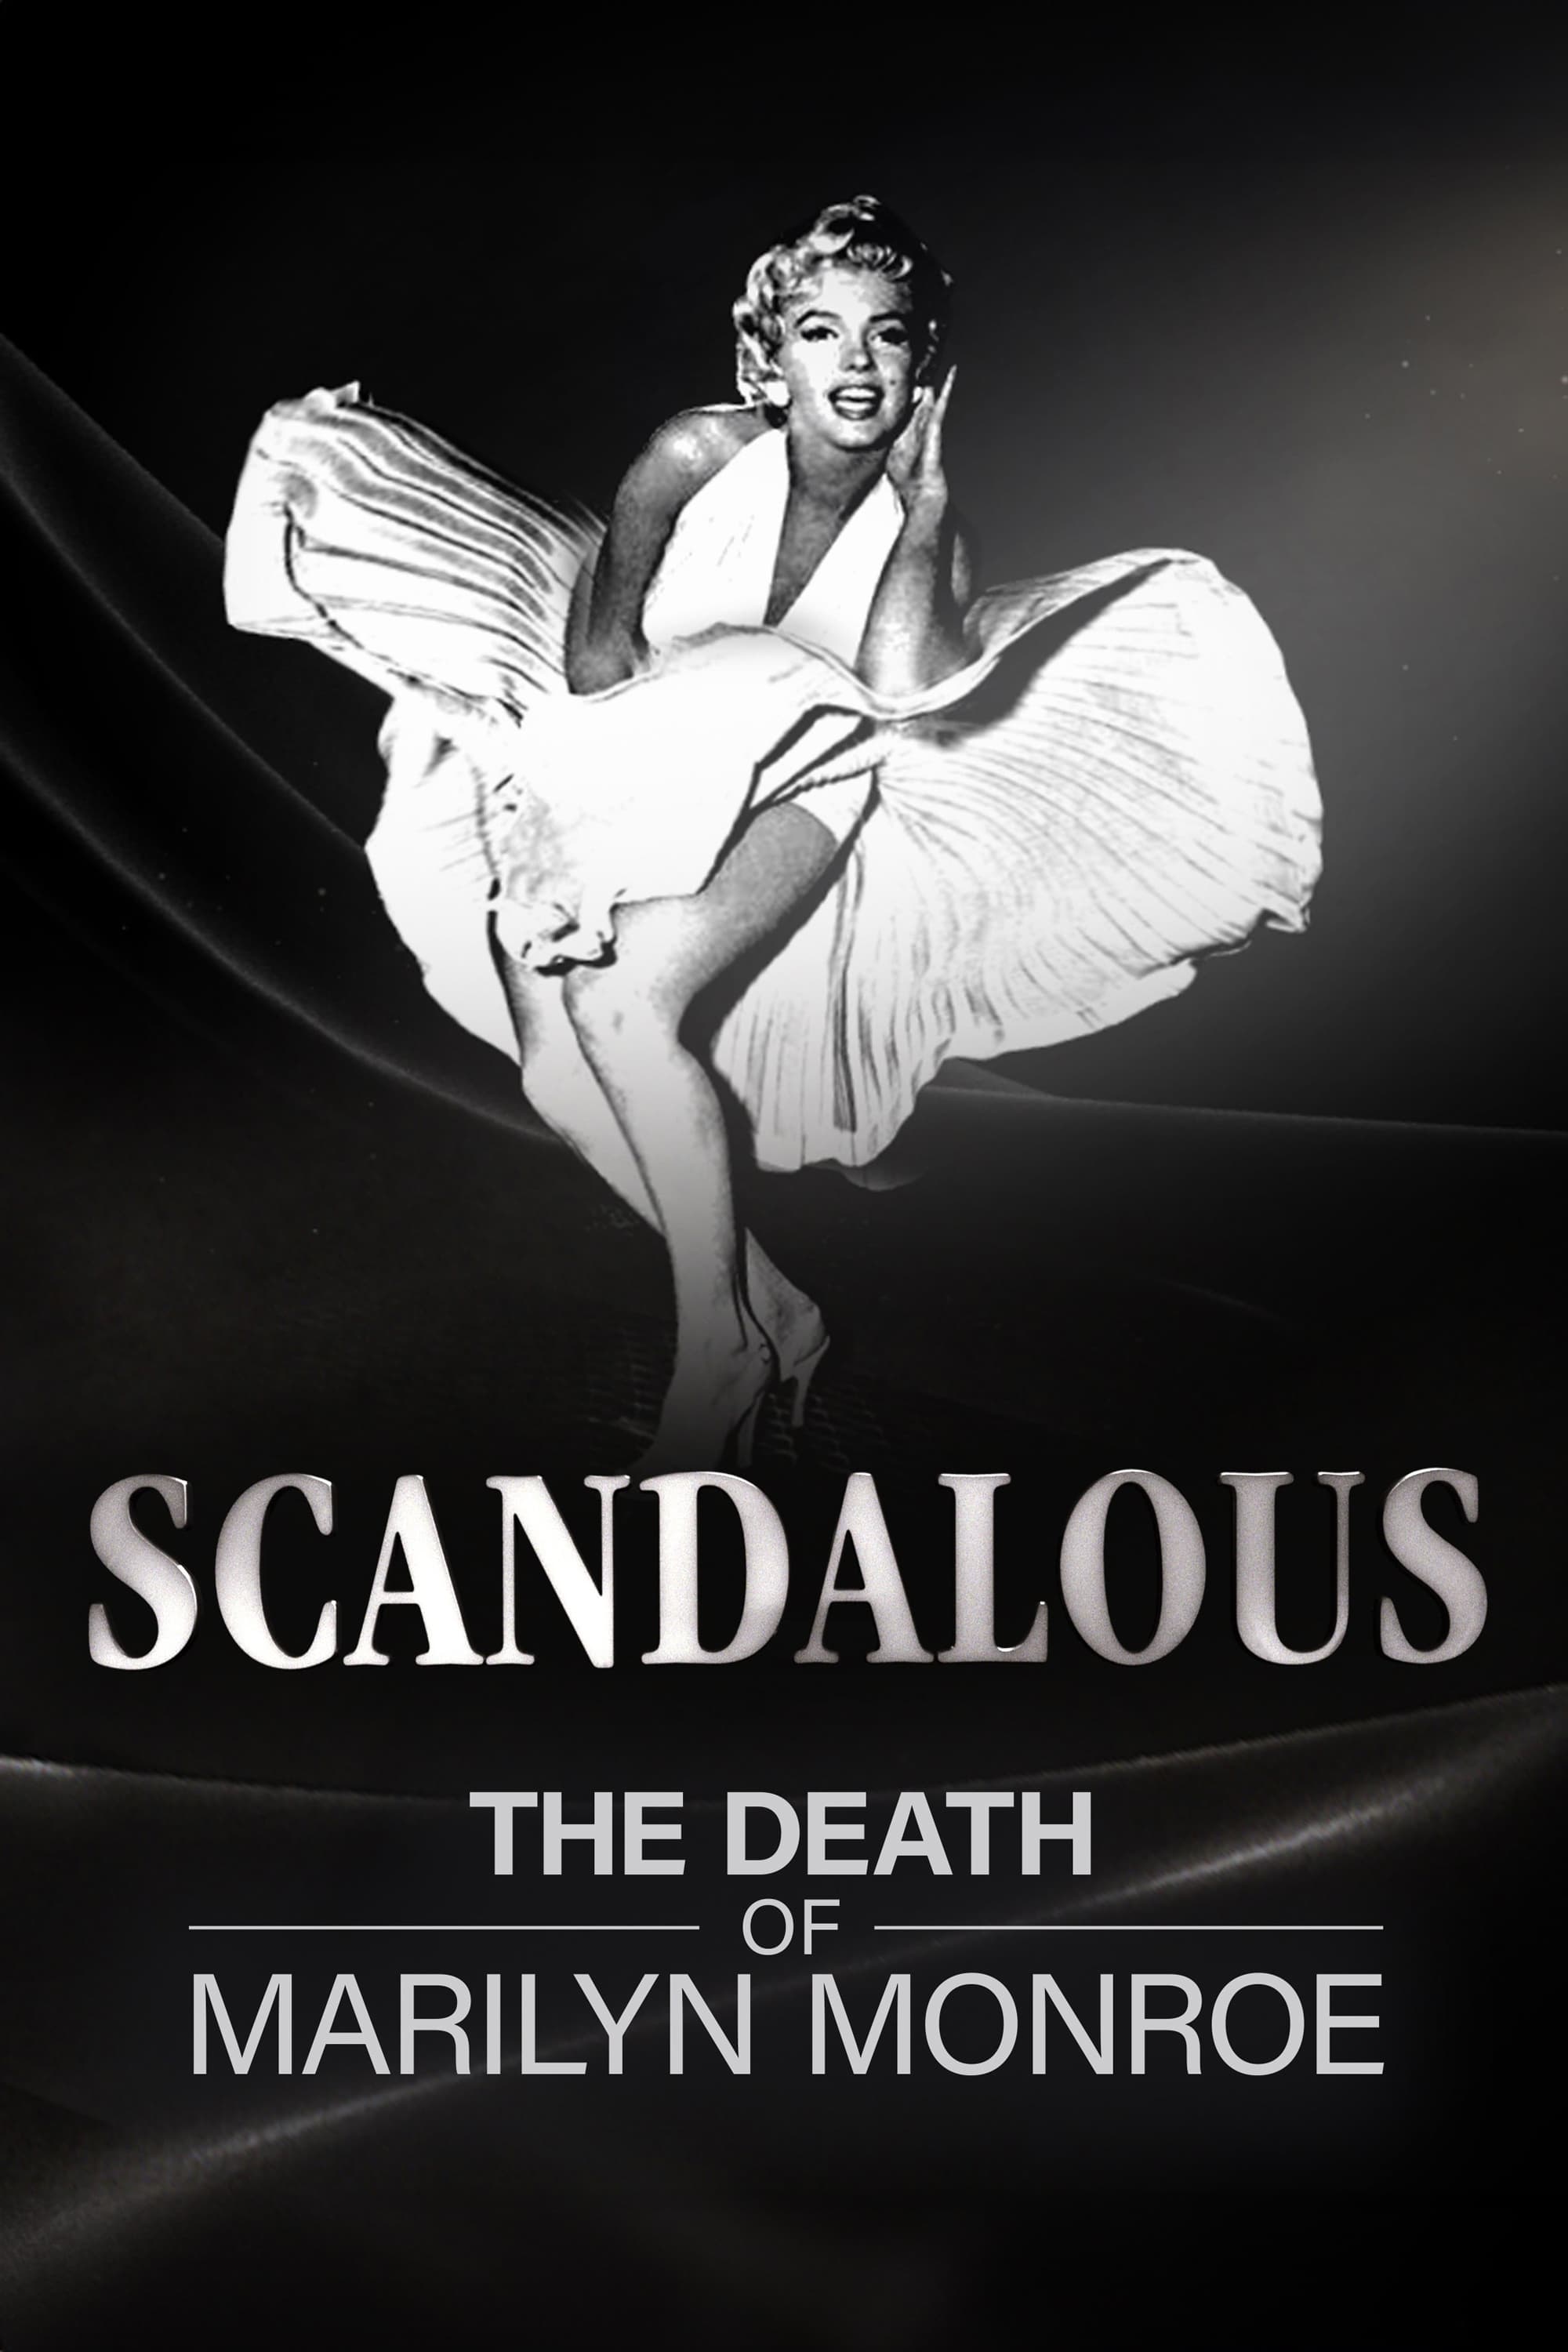 Scandalous: The Death of Marilyn Monroe (Director's Cut)